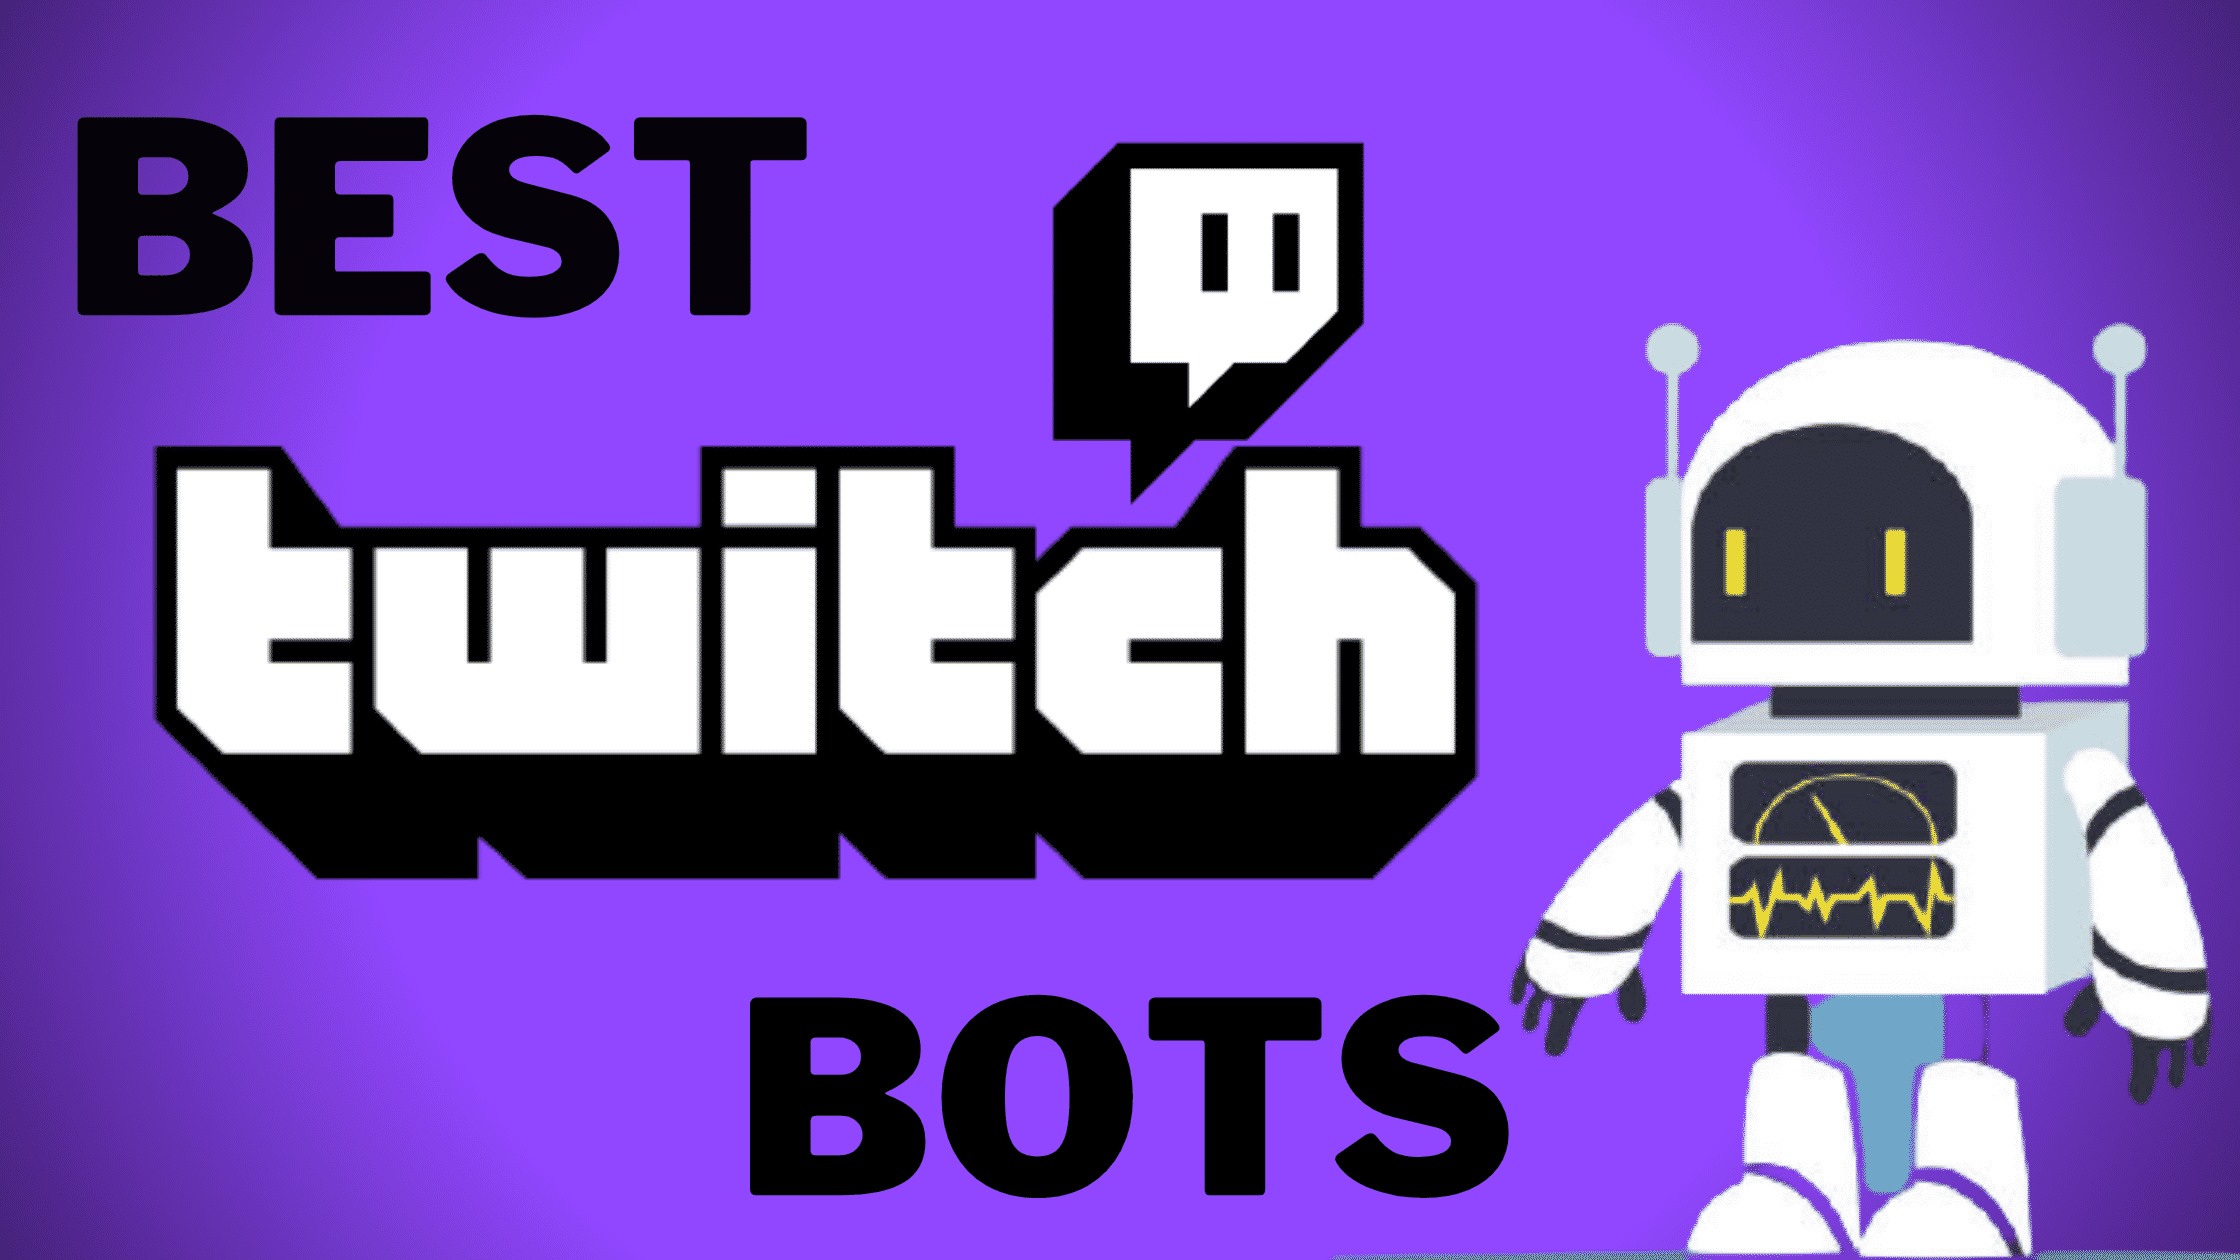 9 Best Twitch Bots